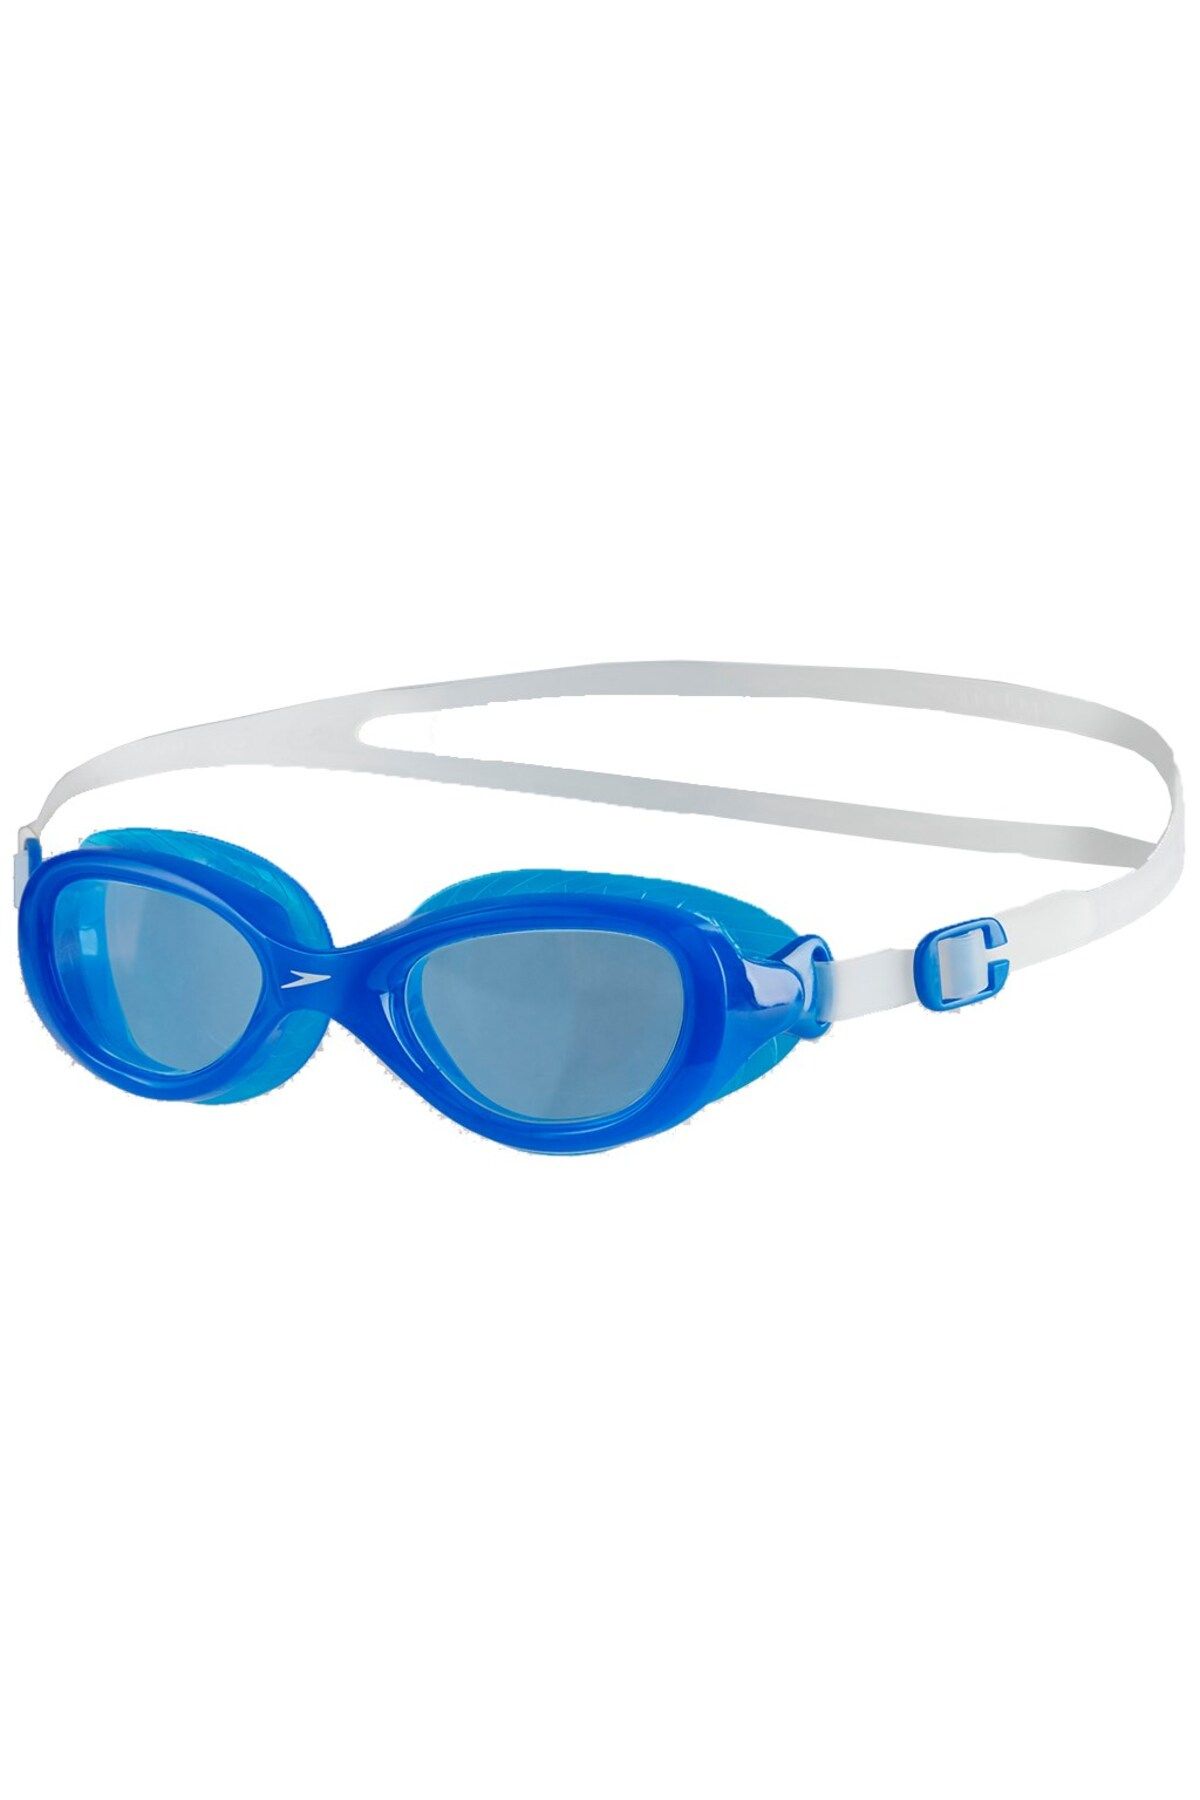 SPEEDO Futura Classic Çocuk Yüzücü Gözlüğü